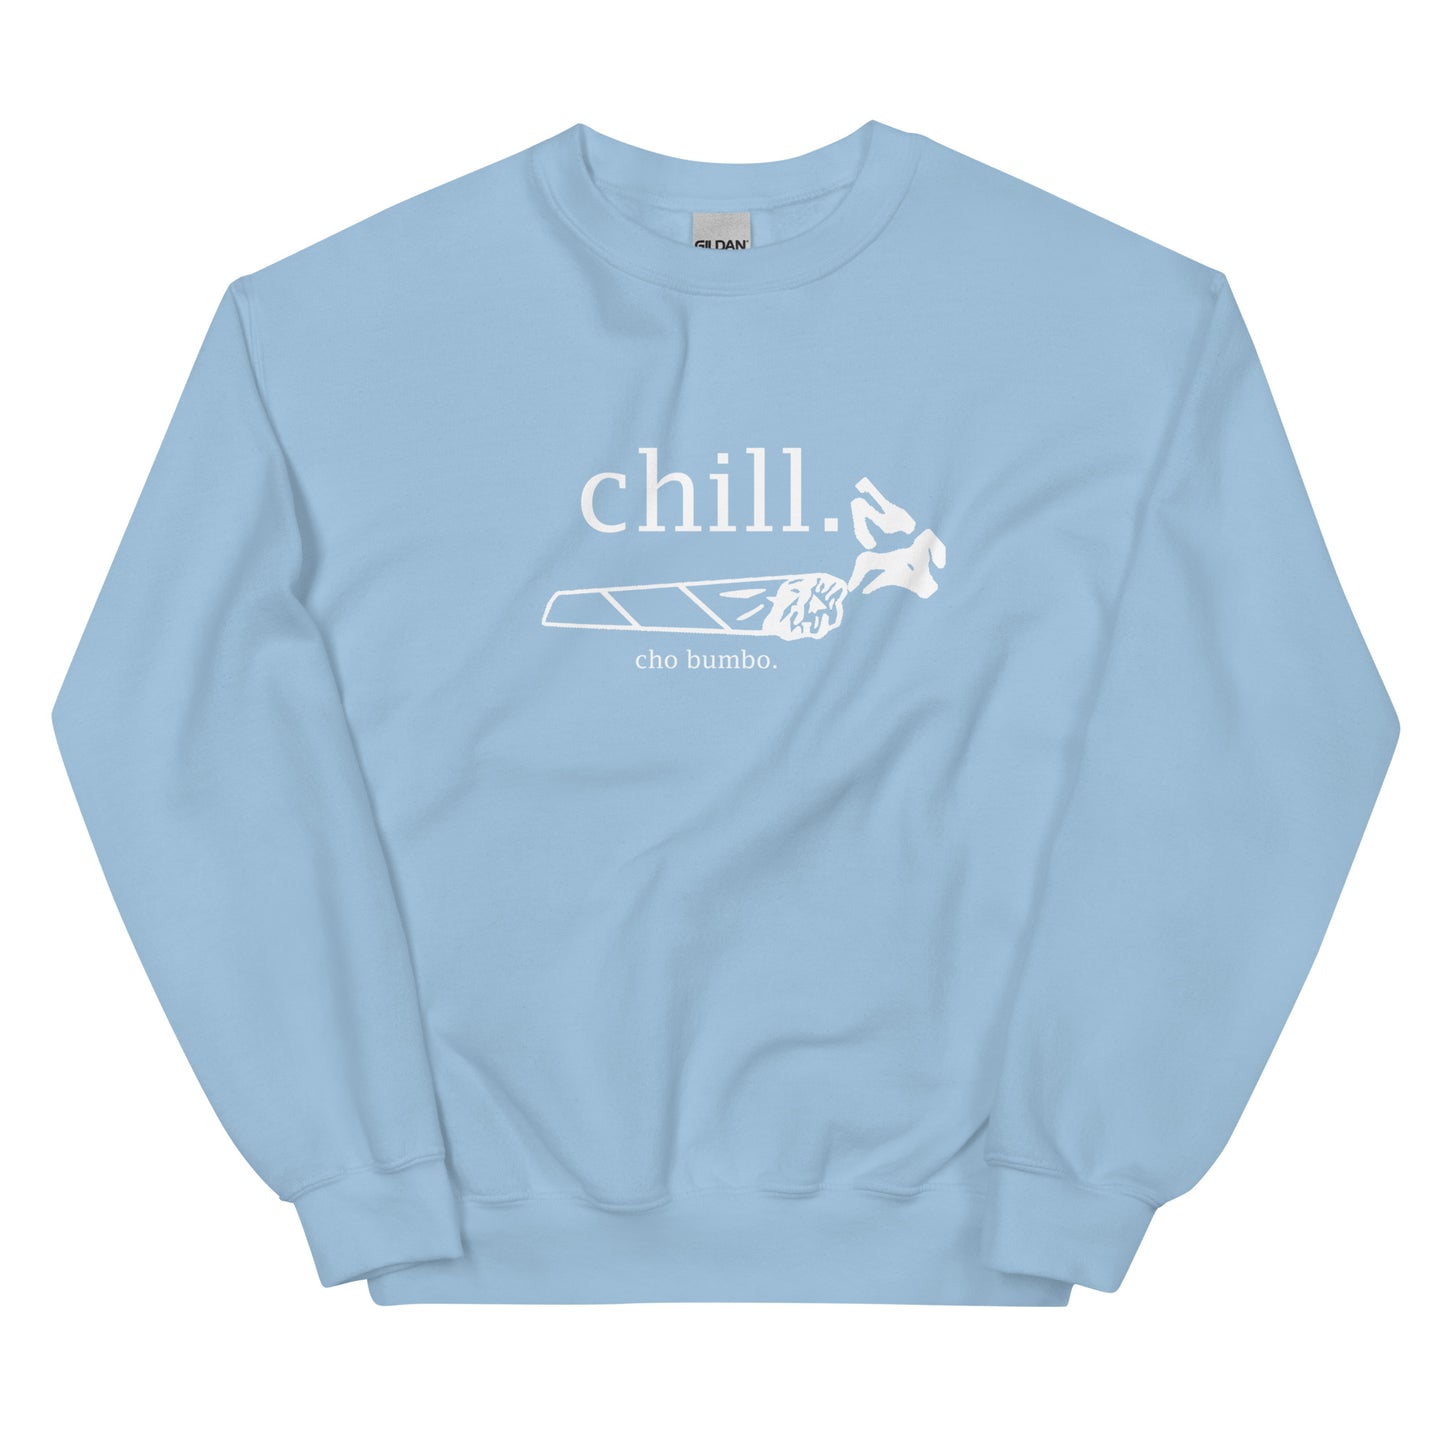 Chill "Cho bumbo" Sweatshirt